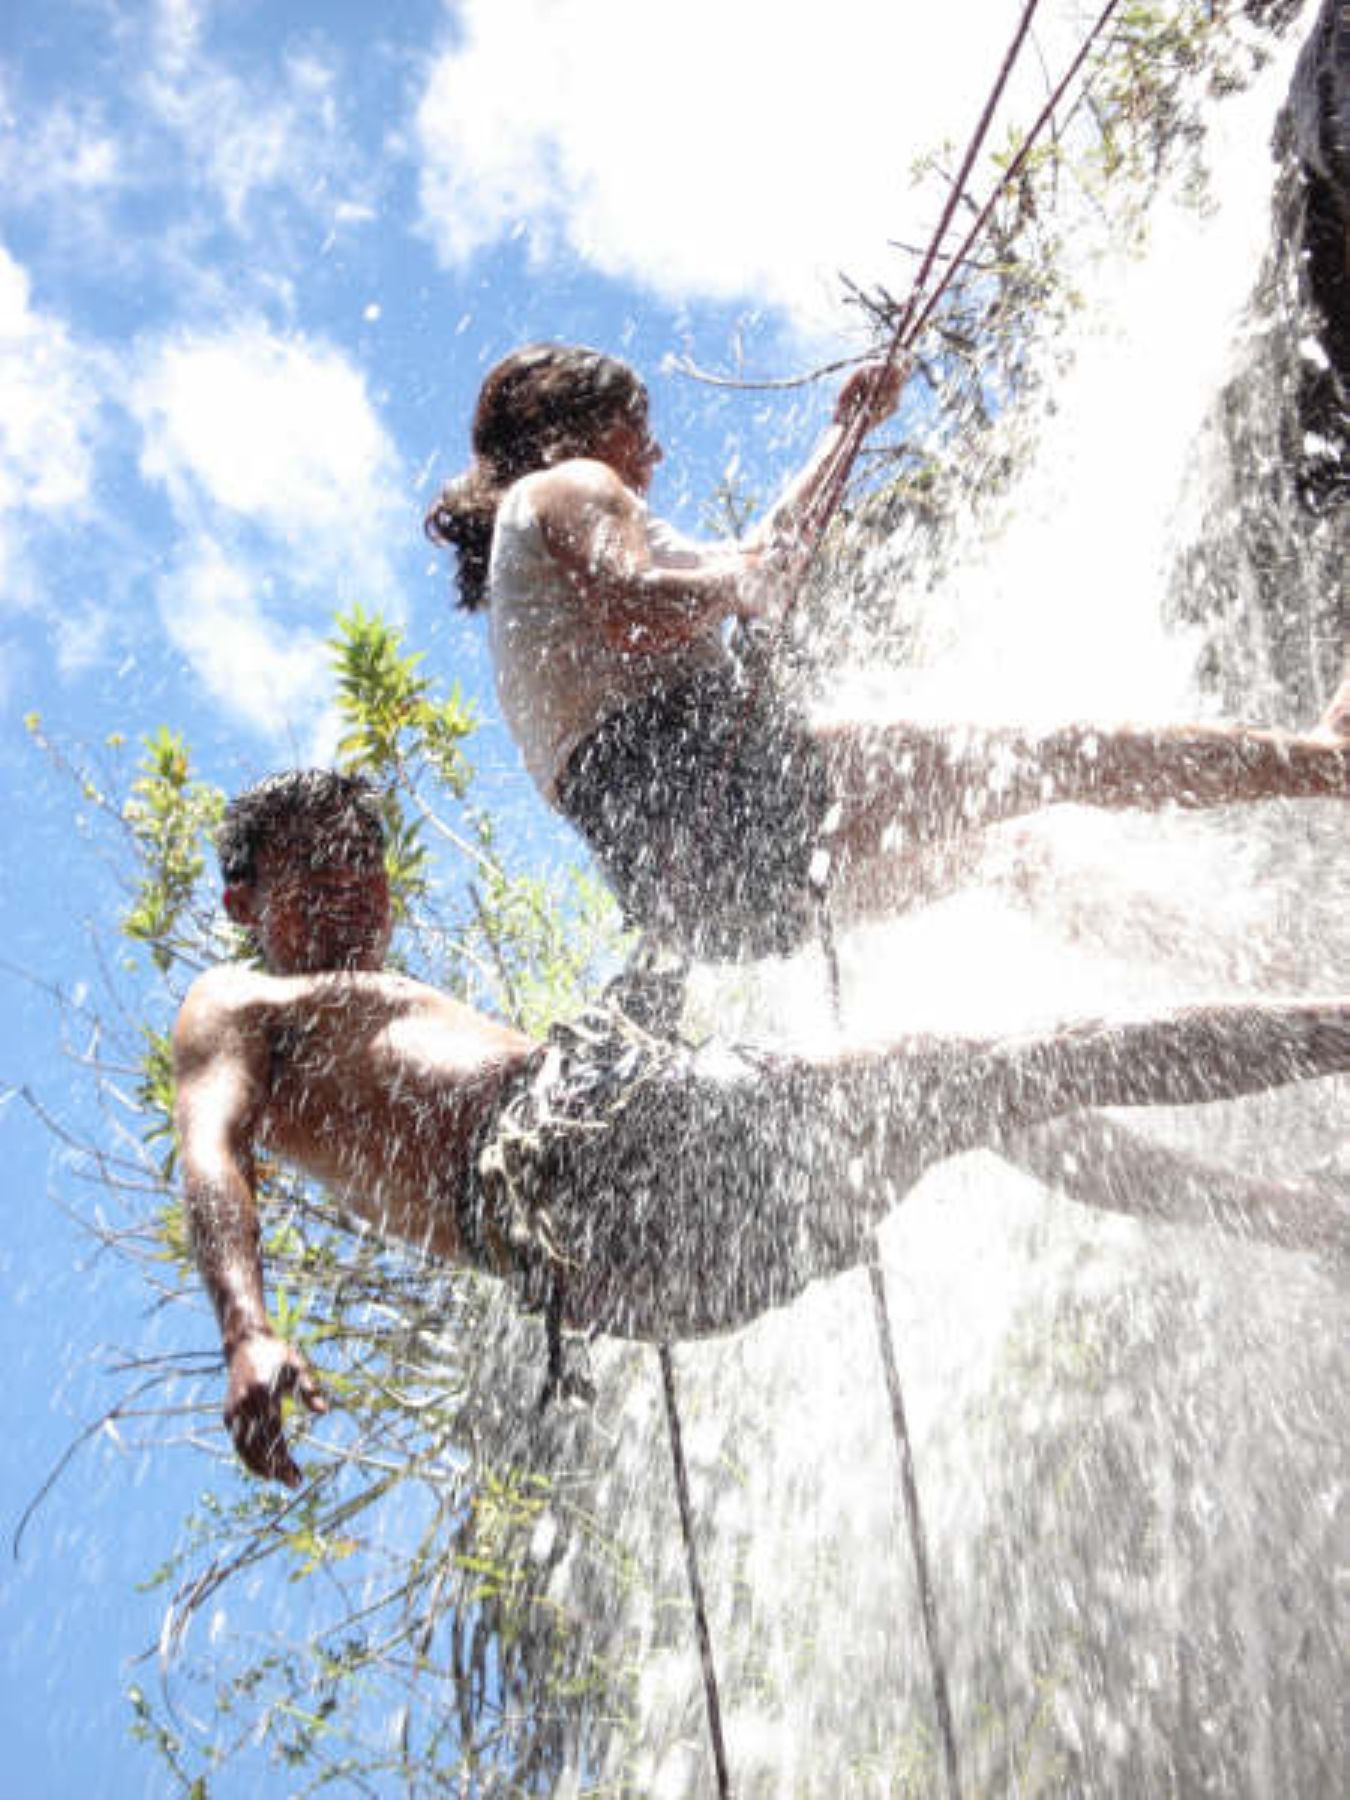 Canyoning, deporte de aventura que se practicará durante festival a realizarse en el Callejón de Huaylas. Foto: ANDINA/Municipalidad de Huaraz.